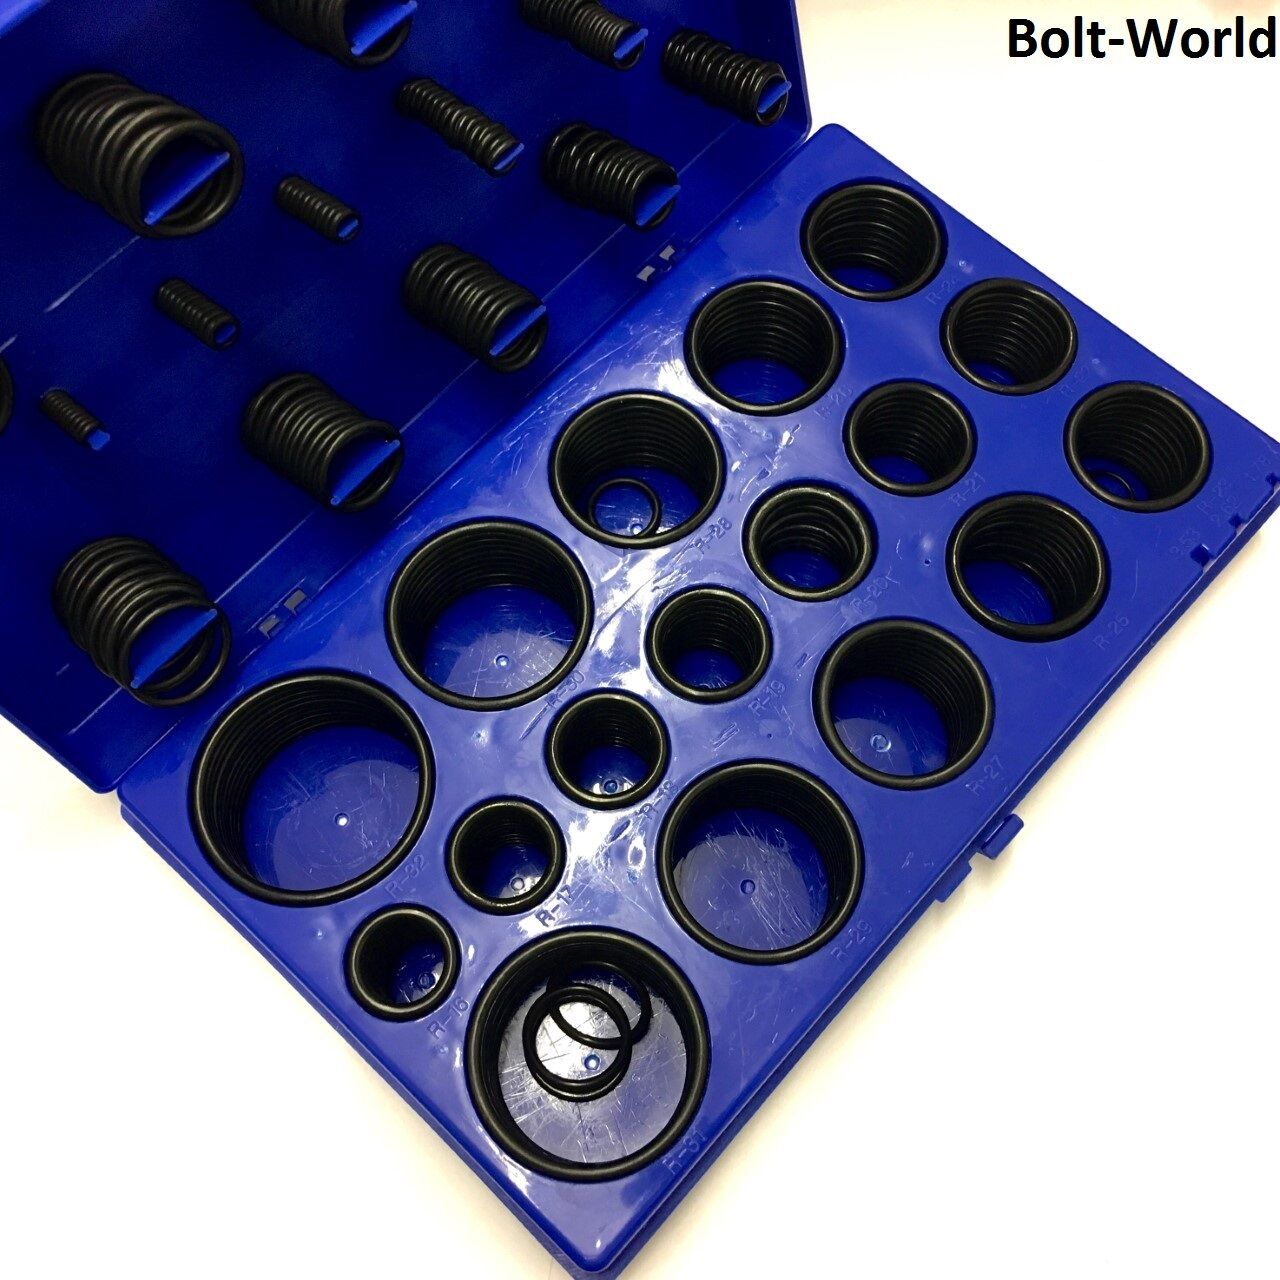 419 Pcs Rubber O Ring Oring Seal Plumbing Garage Set Kit 32 Sizes With Case  4-34 Bolt WorldBolt World